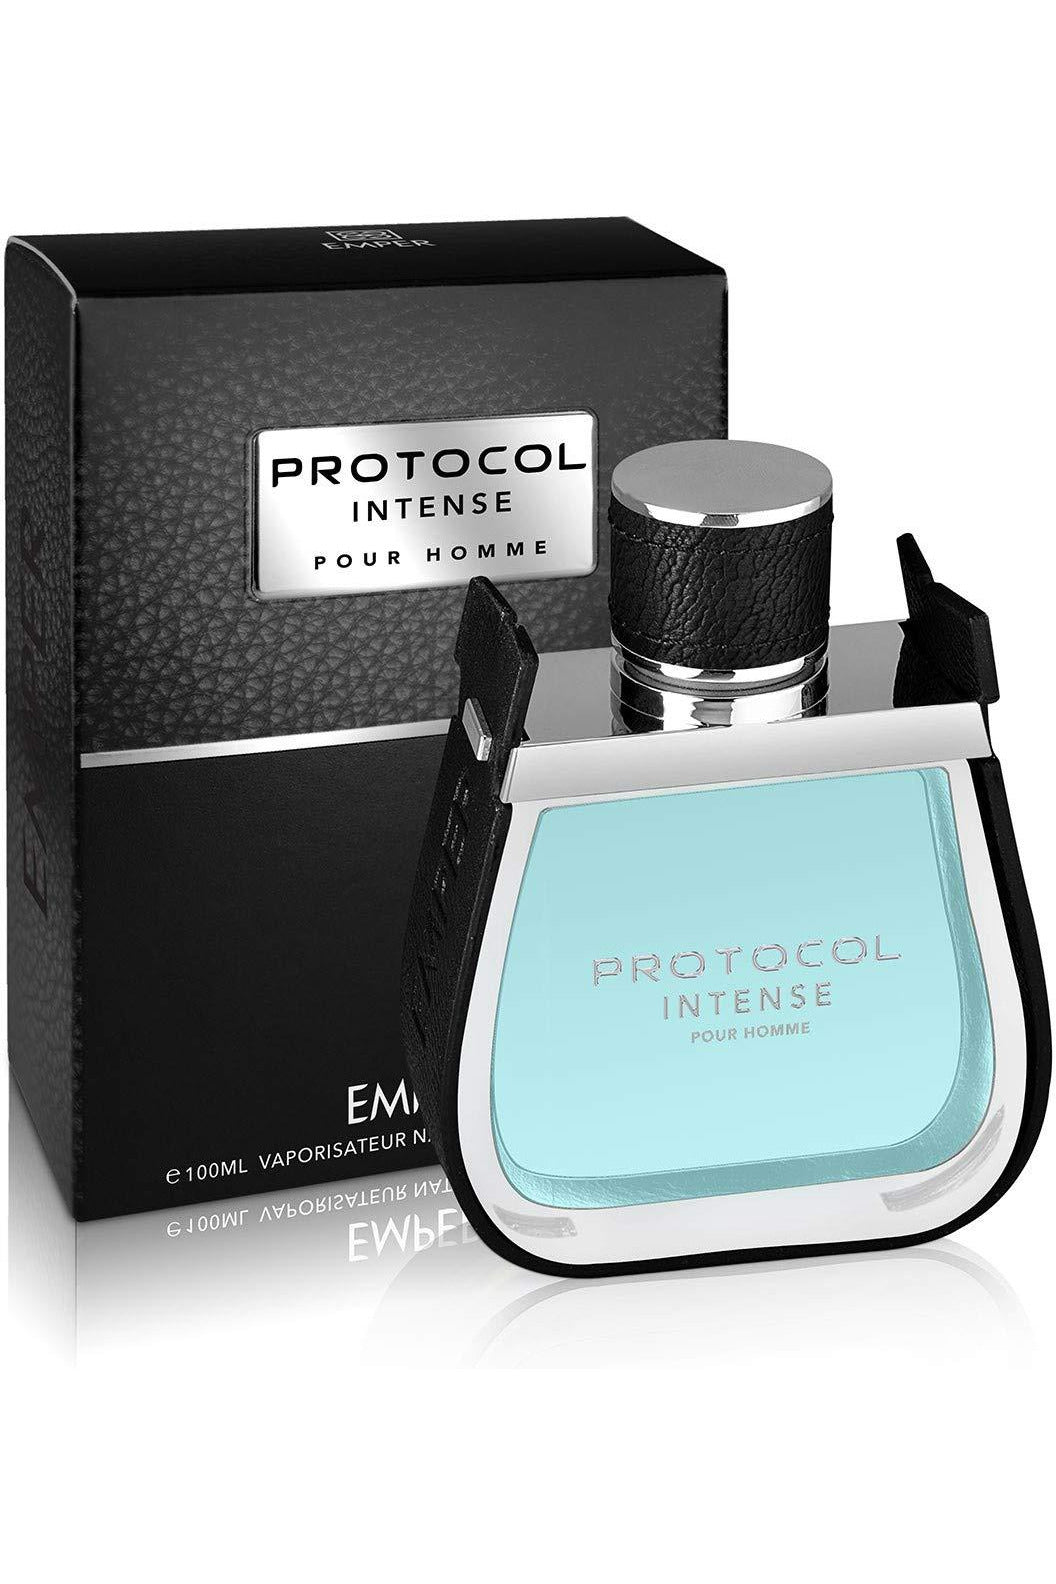 Buy Emper Protocol Intense Men EDP - 100ml in Pakistan